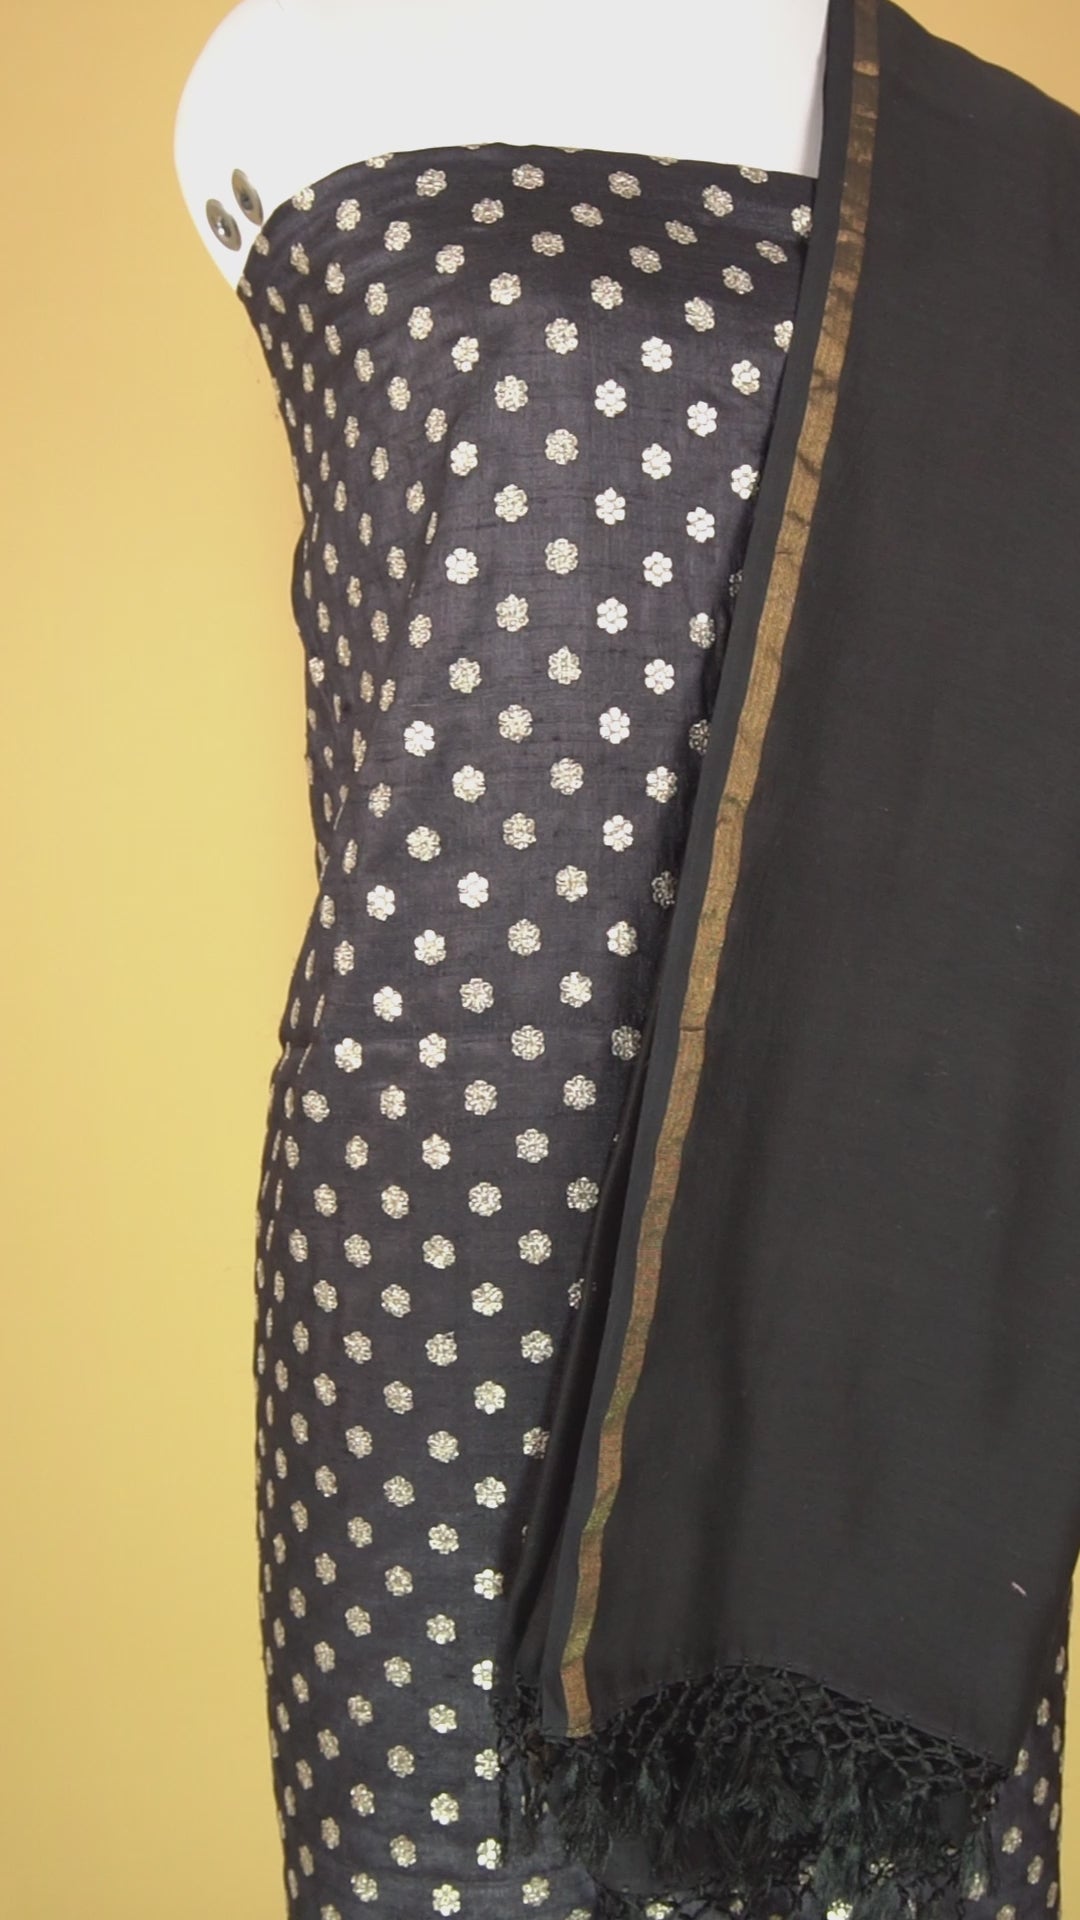 Isa Buti Suit fabric set on Tussar Silk (Unstitched)- Black